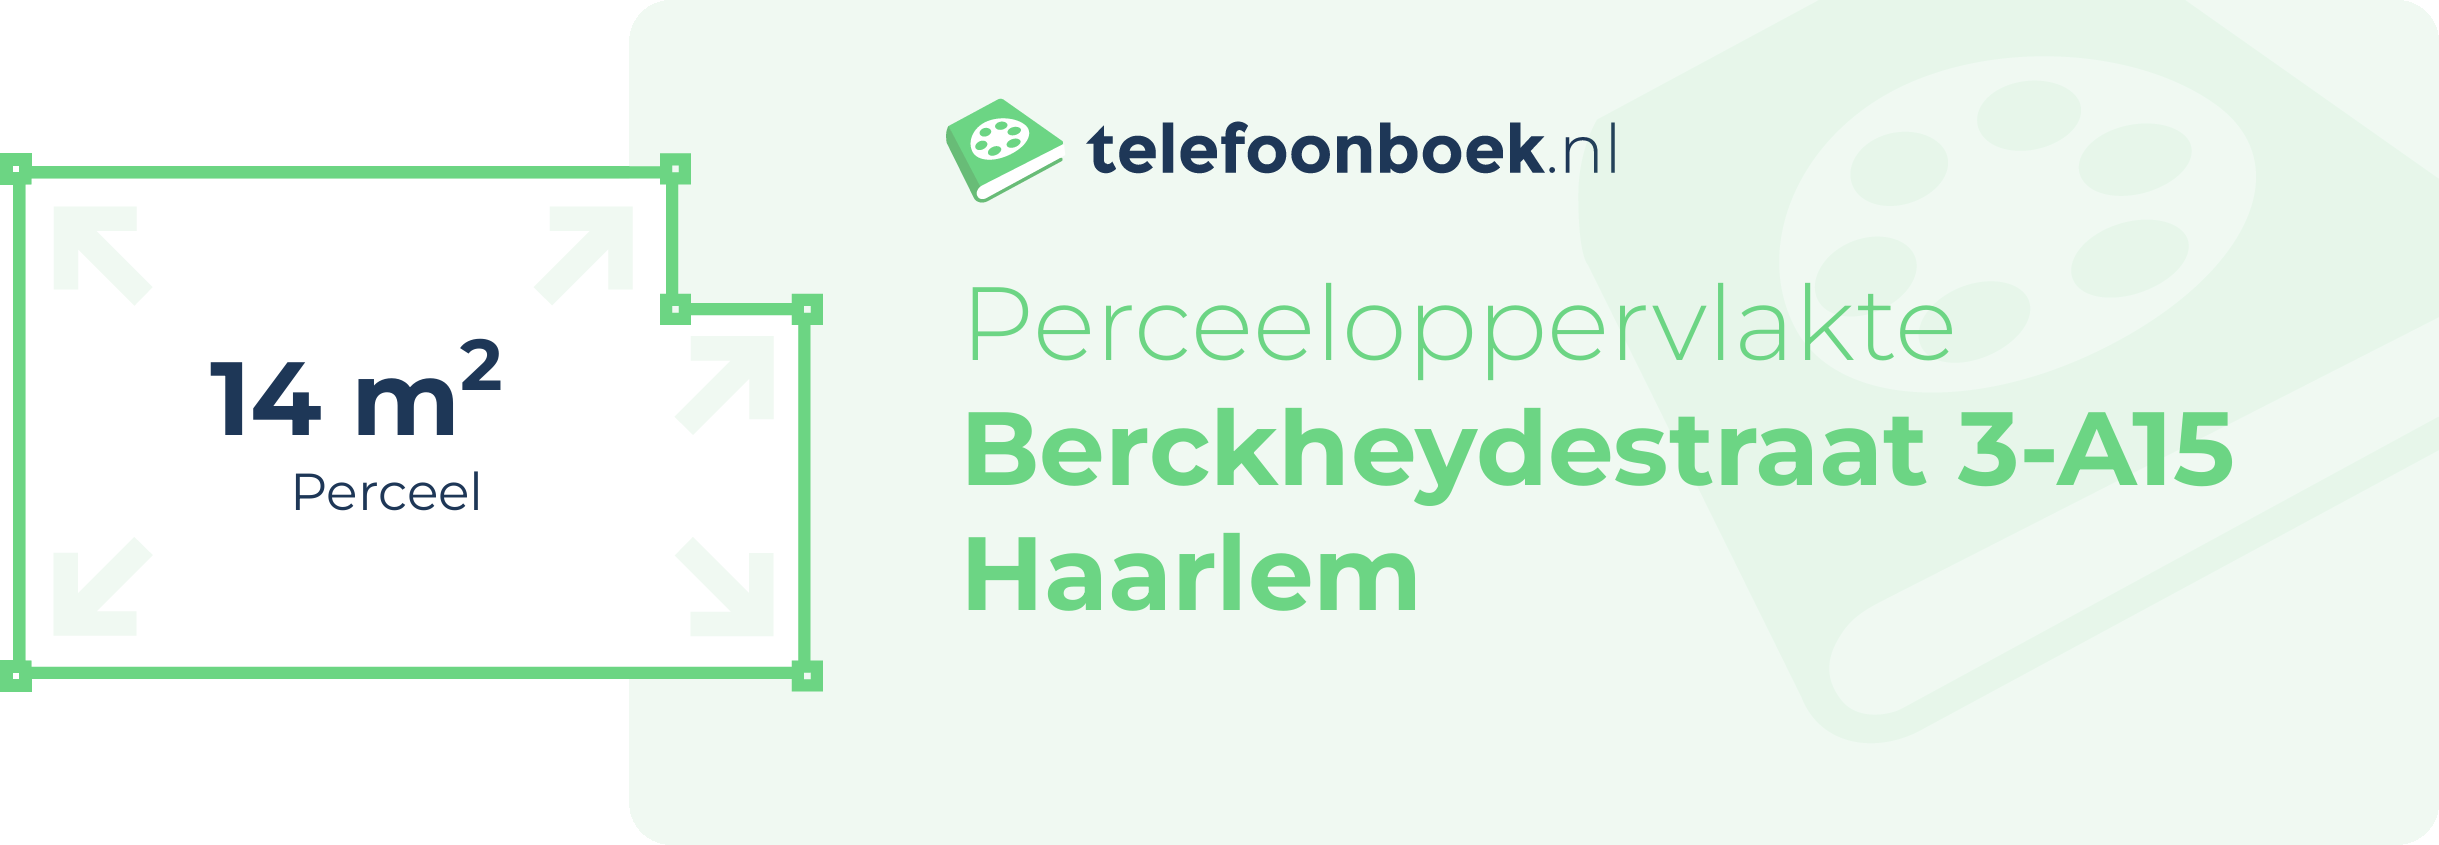 Perceeloppervlakte Berckheydestraat 3-A15 Haarlem